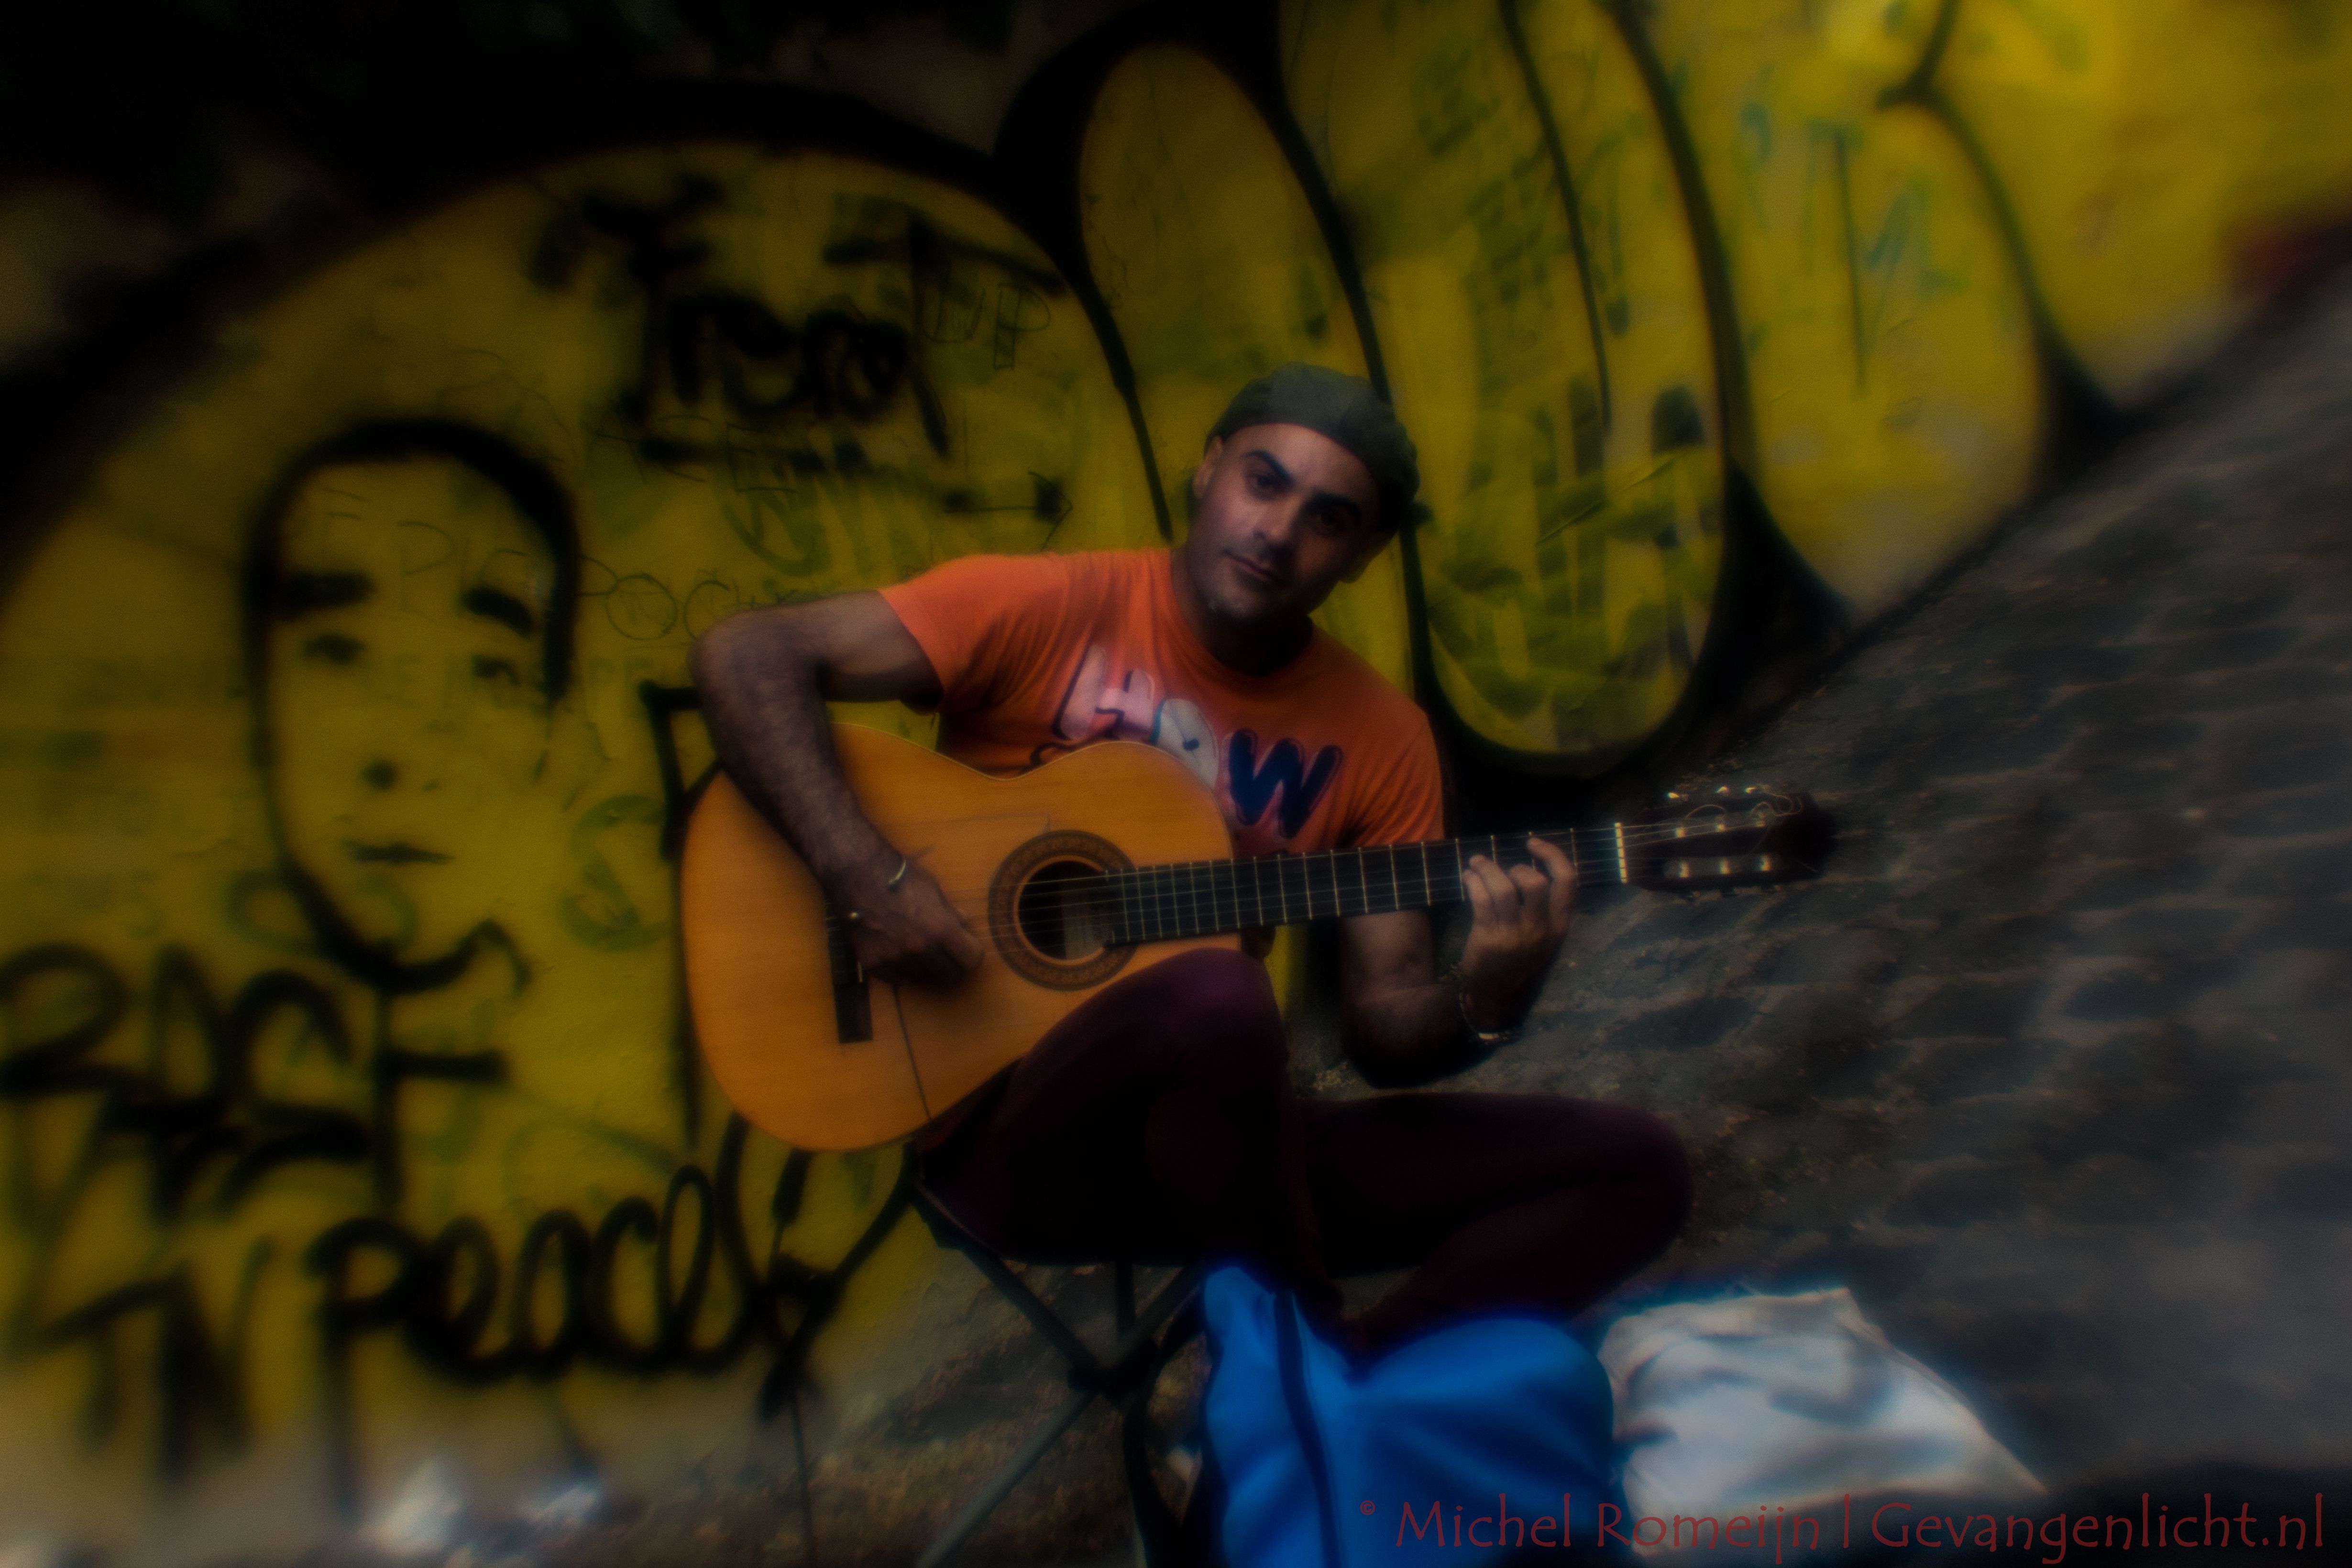 Street musician in Paris